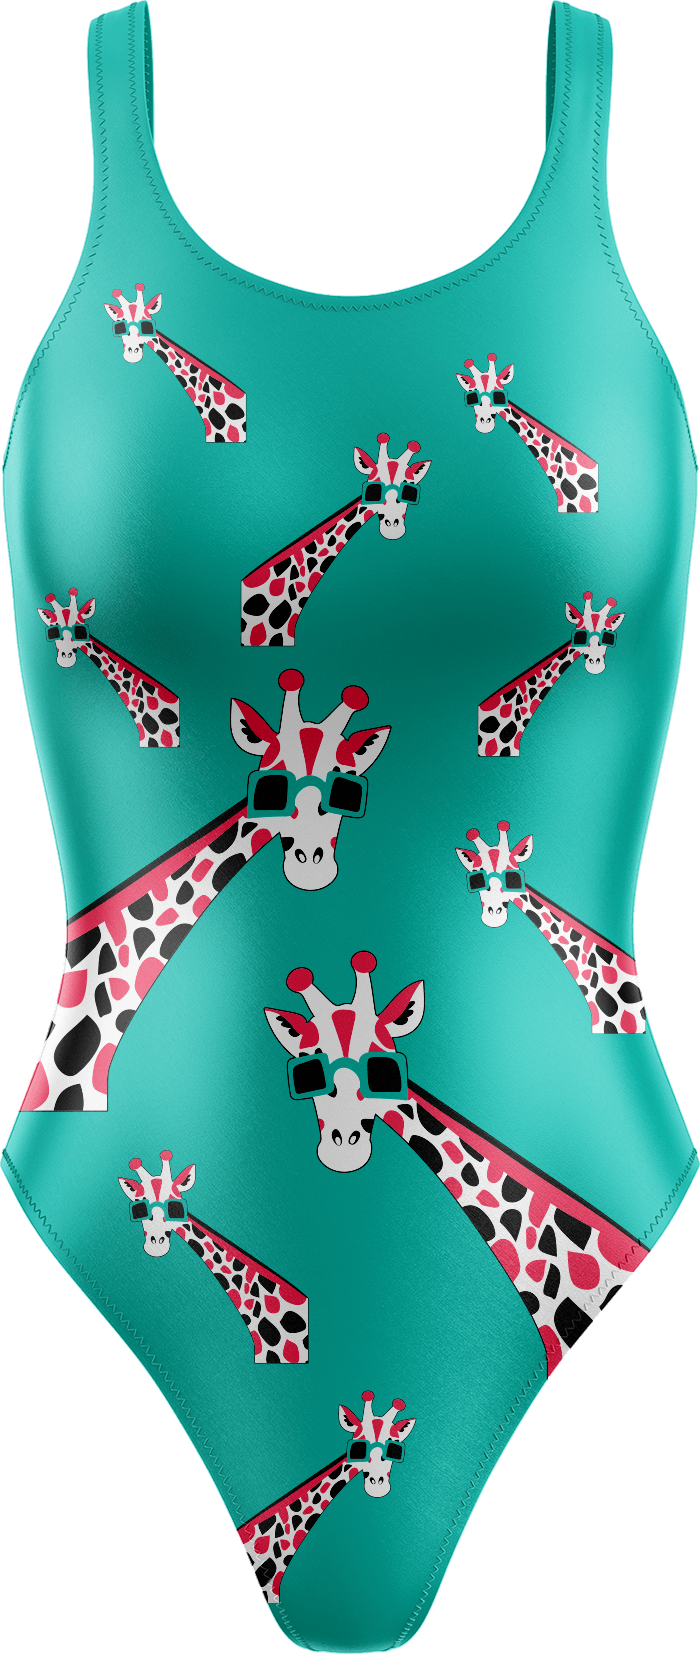 Gigi Giraffe Swimsuits - fungear.com.au